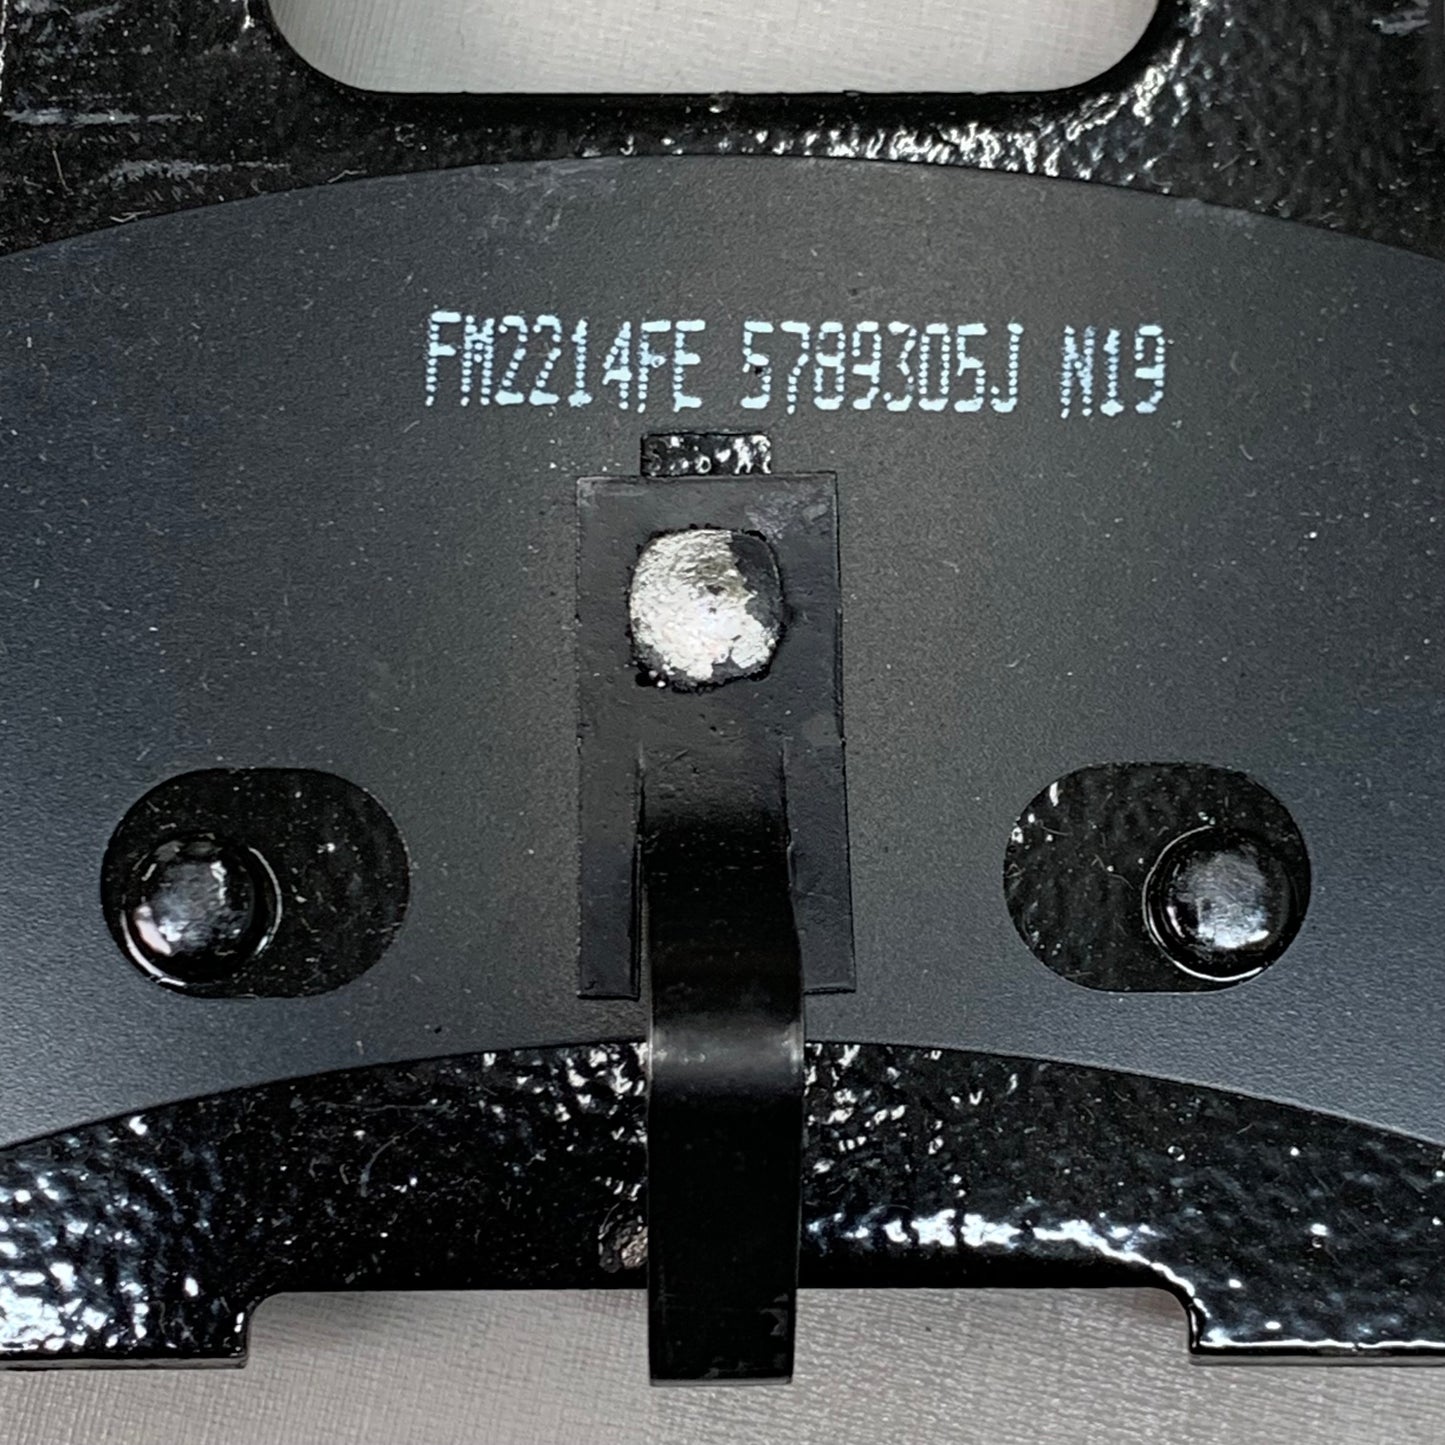 WAGNER SevereDuty Semi-Metallic Disc Brake Pad Set 6" x 2" SX370